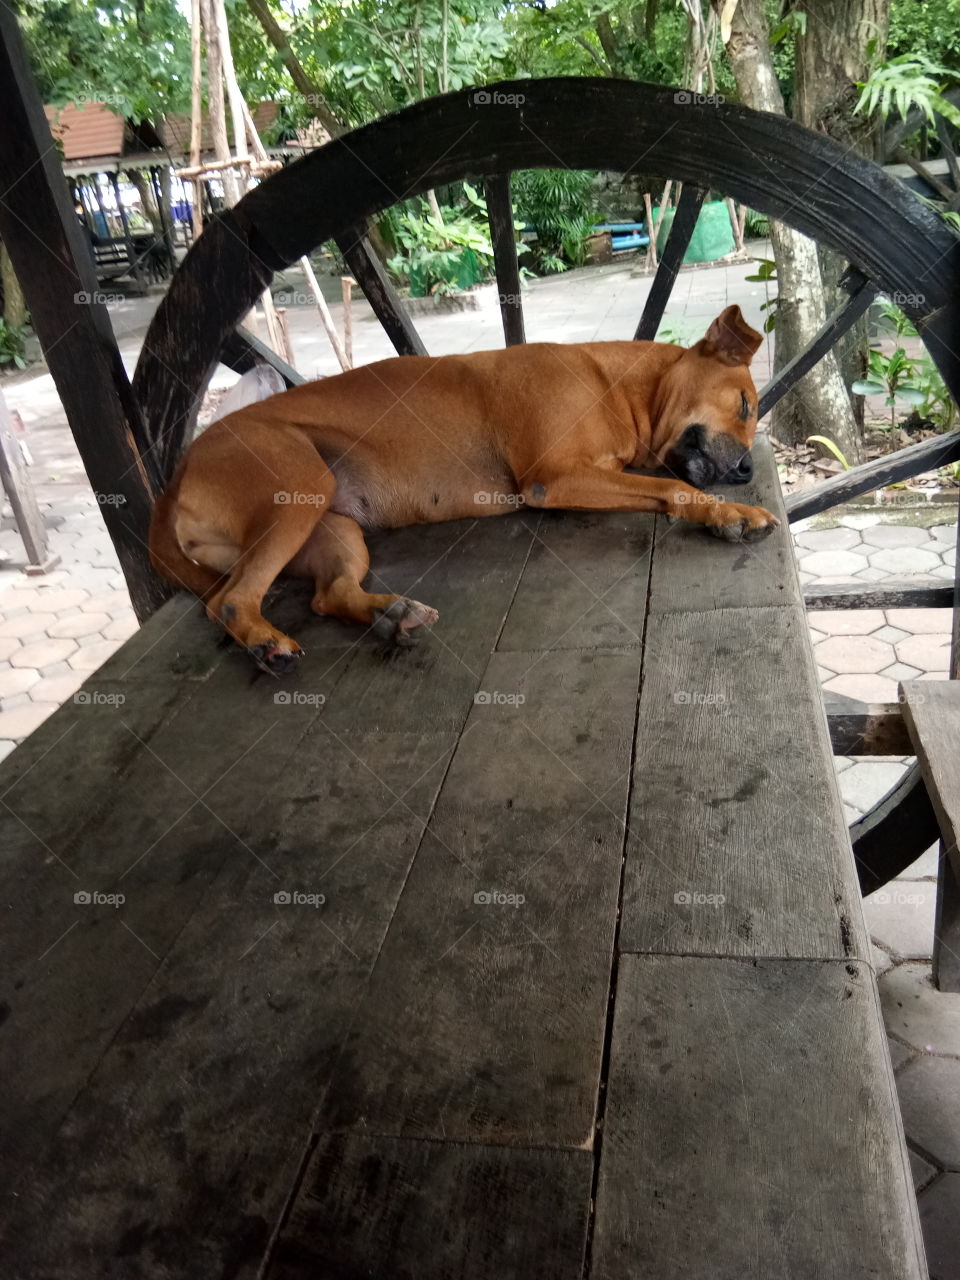 dog
sleep
thailand